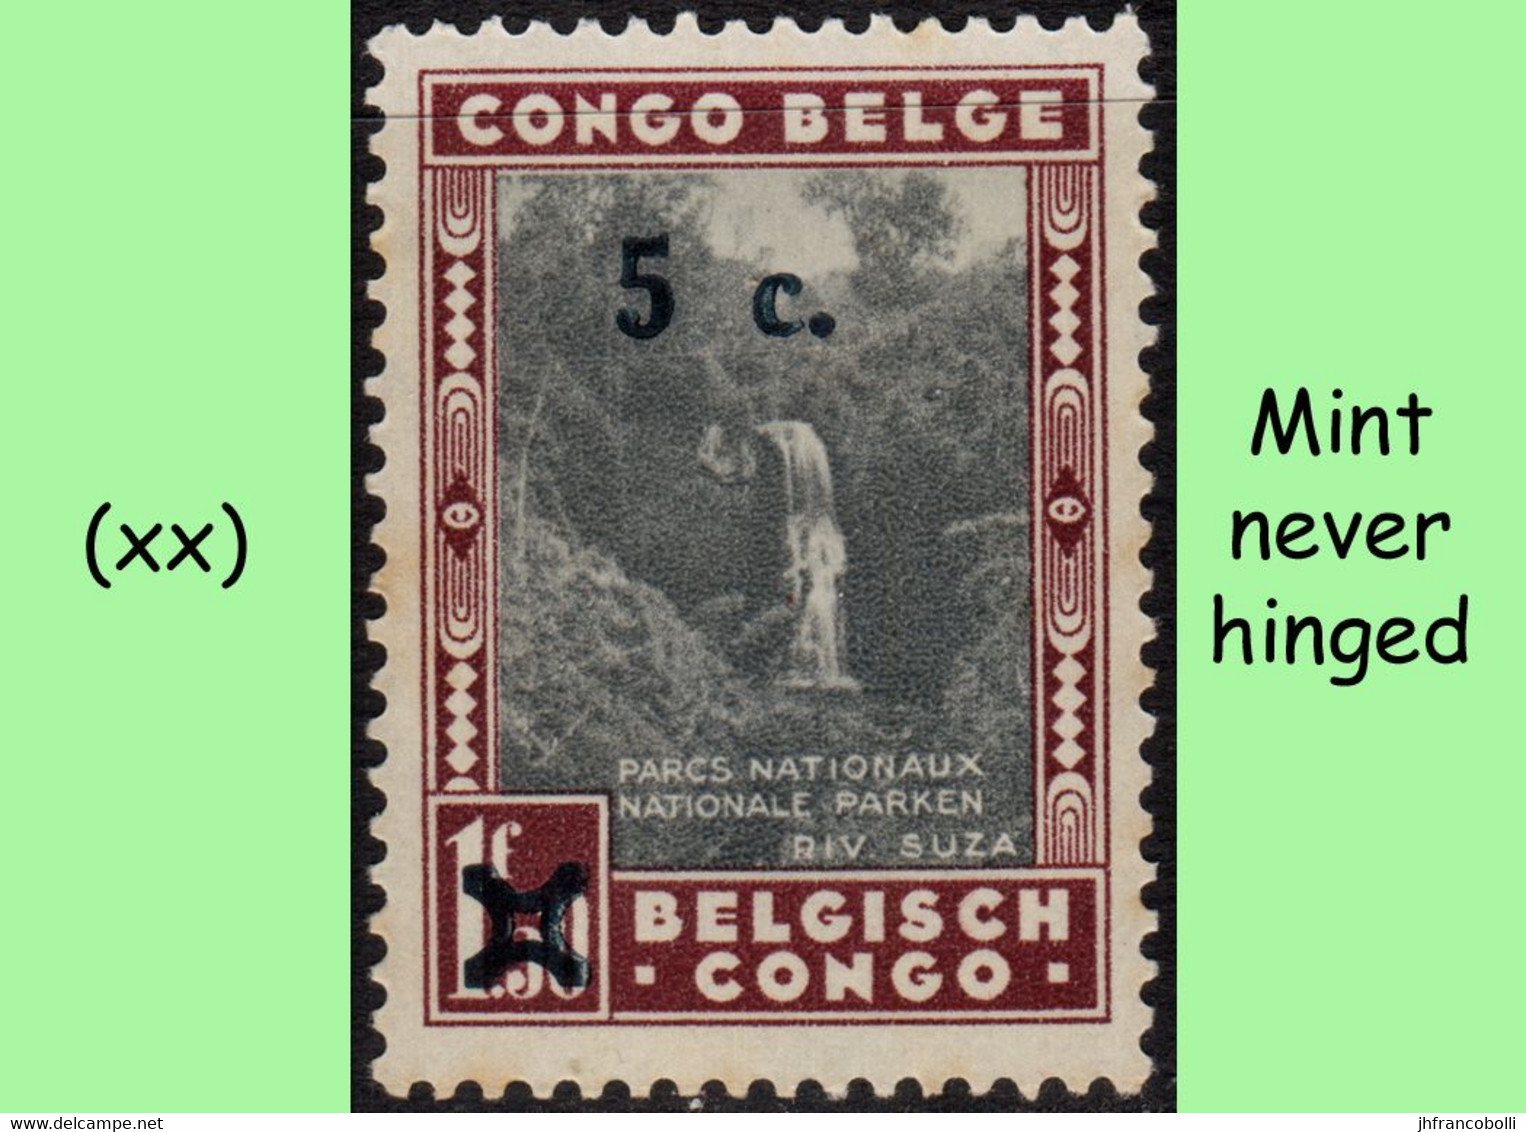 1941 ** BELGIAN CONGO / CONGO BELGE = COB 226 MNH SUZA RIVER = ANGLE BLOCK OF -4- STAMPS WITH ORIGINAL GUM - Blocks & Kleinbögen